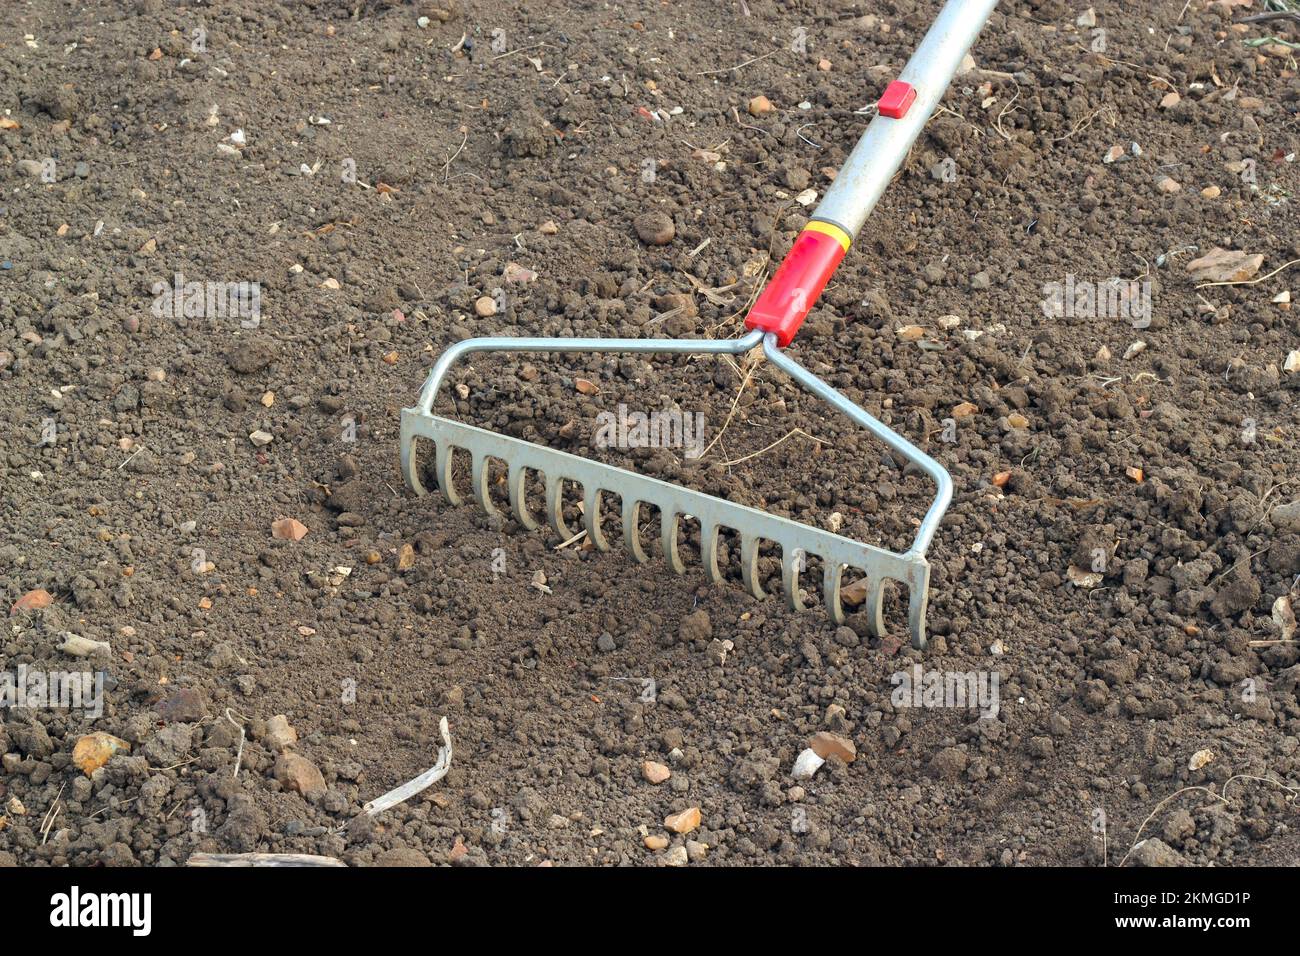 Raking soil ready to sow seeds or or plant. Gardening. Stock Photo